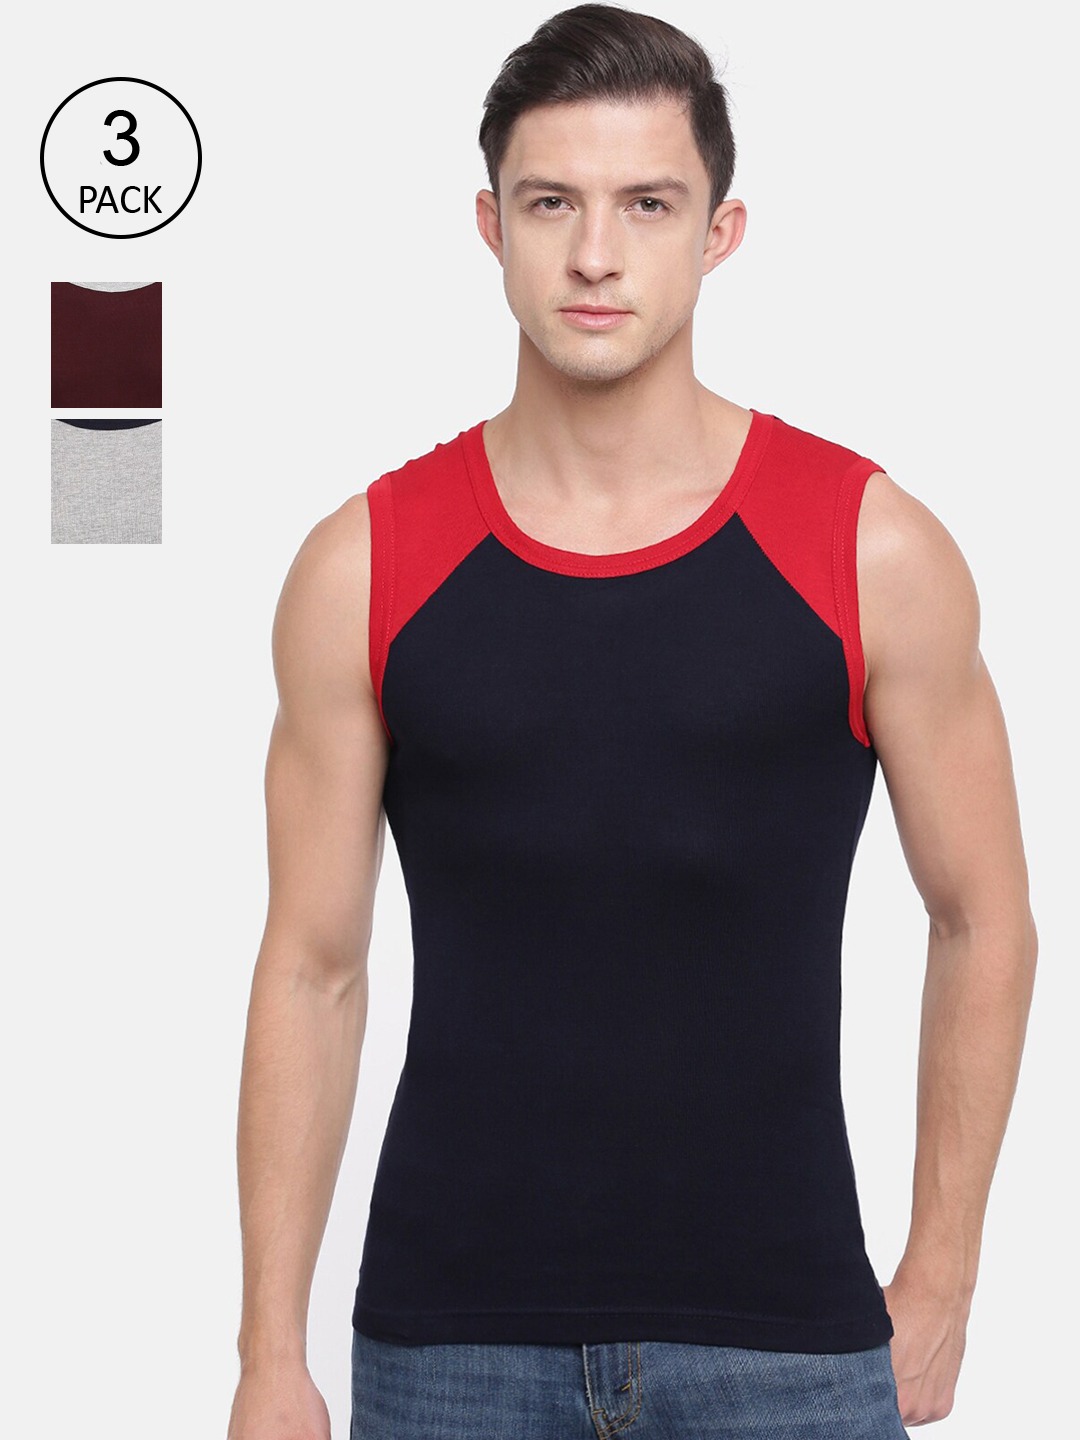 Clothing Innerwear Vests | Genx Men Pack of 3 Assorted Pure Cotton Gym Innerwear Vests - SR39694